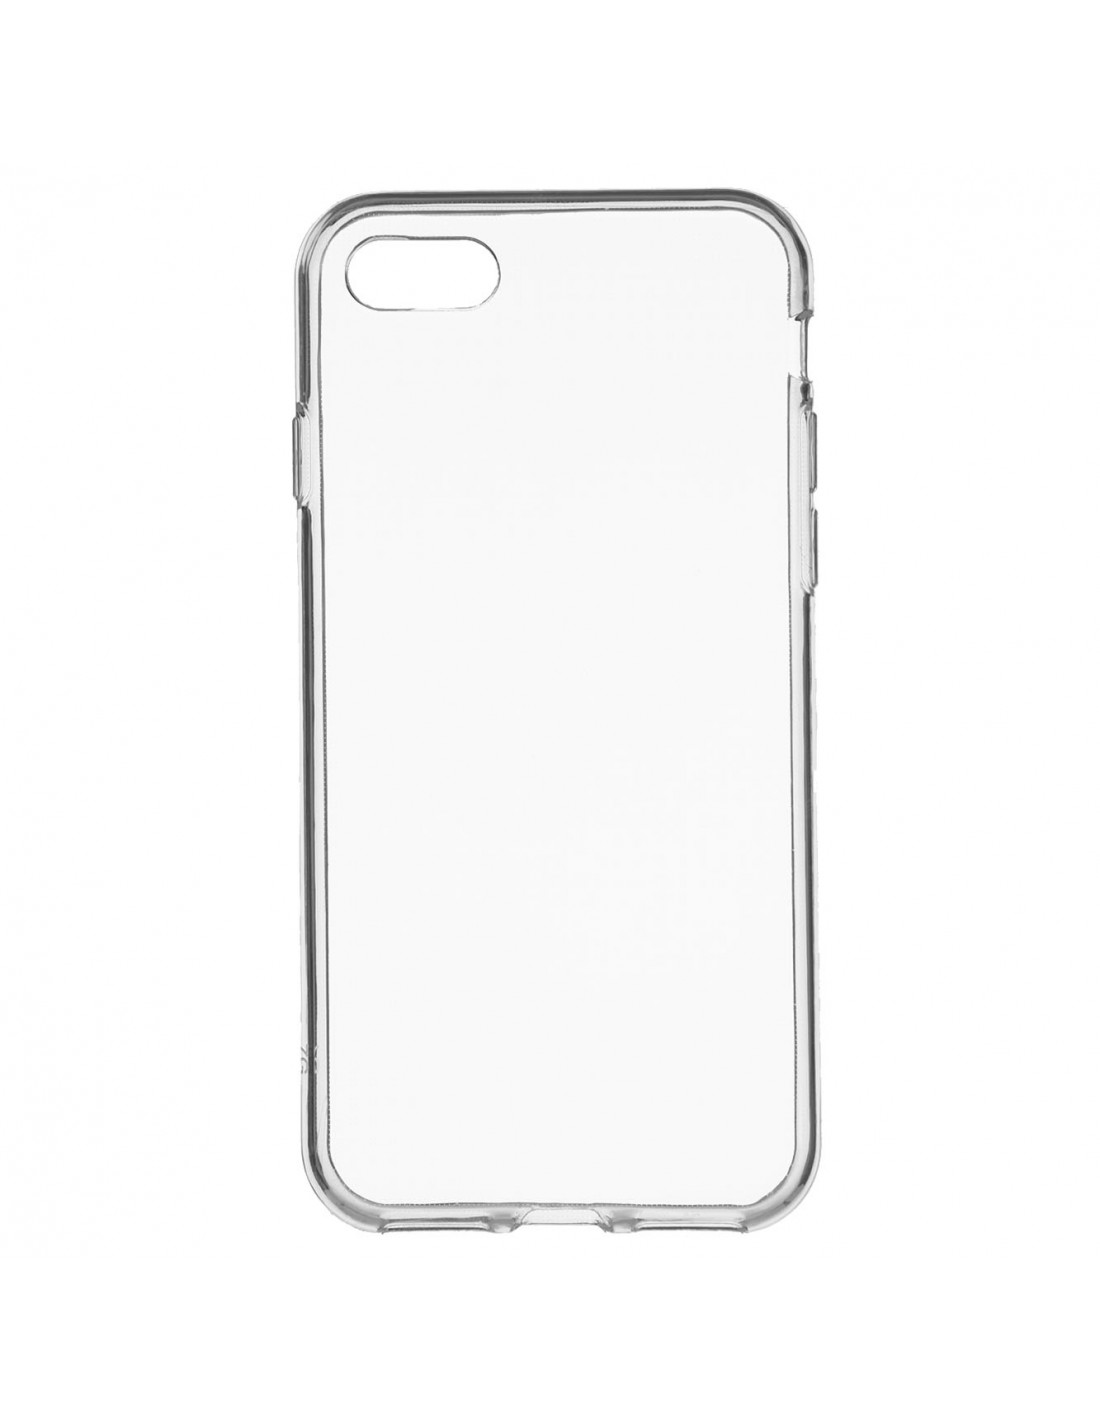 Case-Mate Funda para iPhone 8, color desnudo, resistente, transparente,  ultradelgada, diseño protector para Apple iPhone 8, transparente